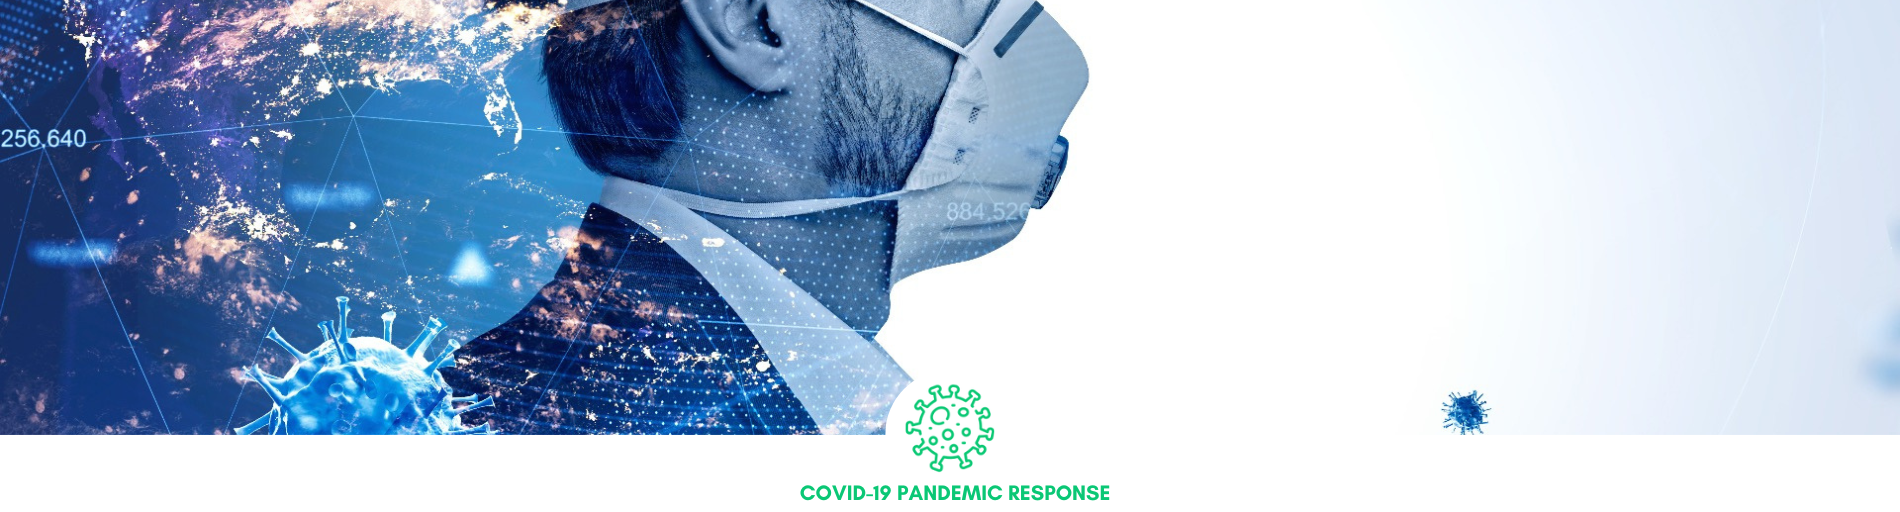 CRA in the Coronavirus Response: Reinvesting in Communities During the Pandemic